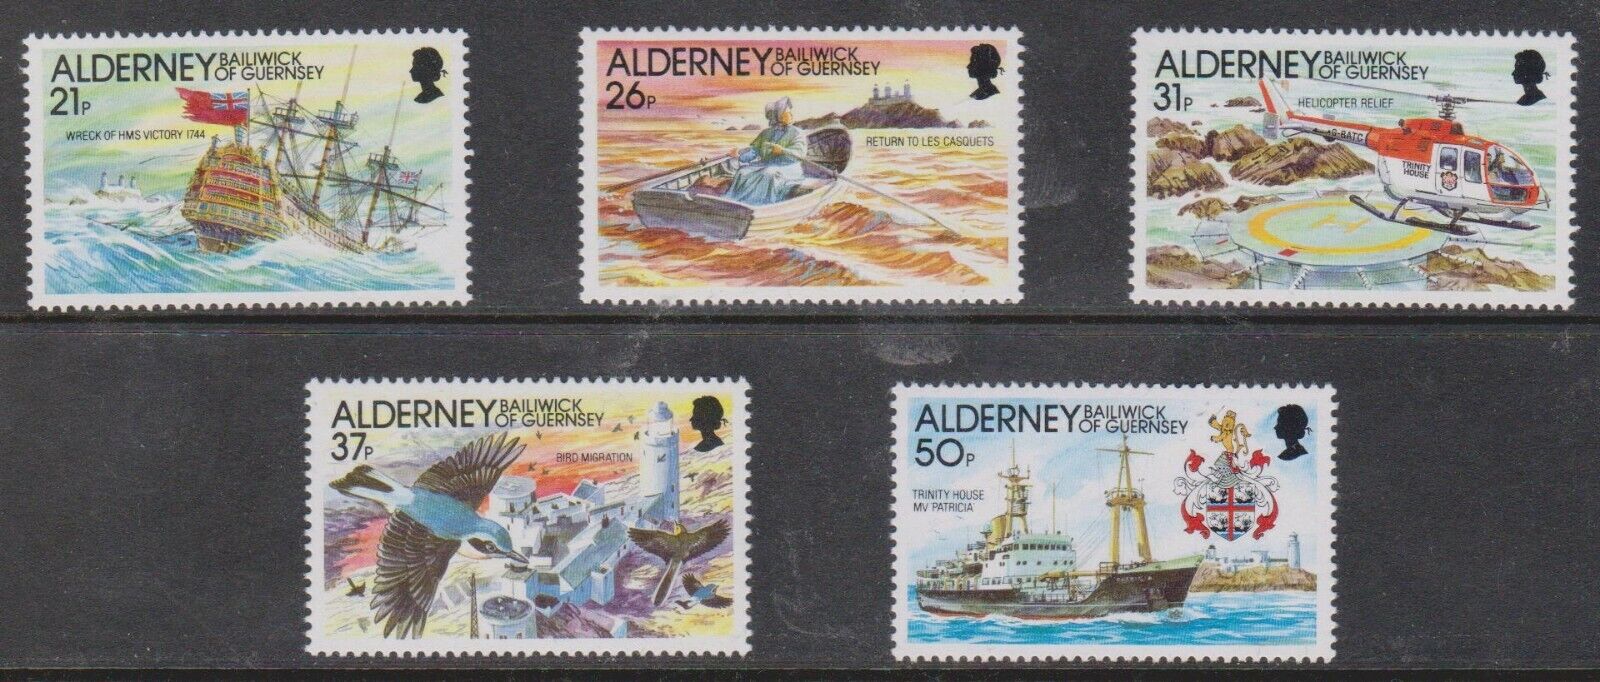 Alderney 1991 - Vapoare, far, elicoopter, serie neuzata